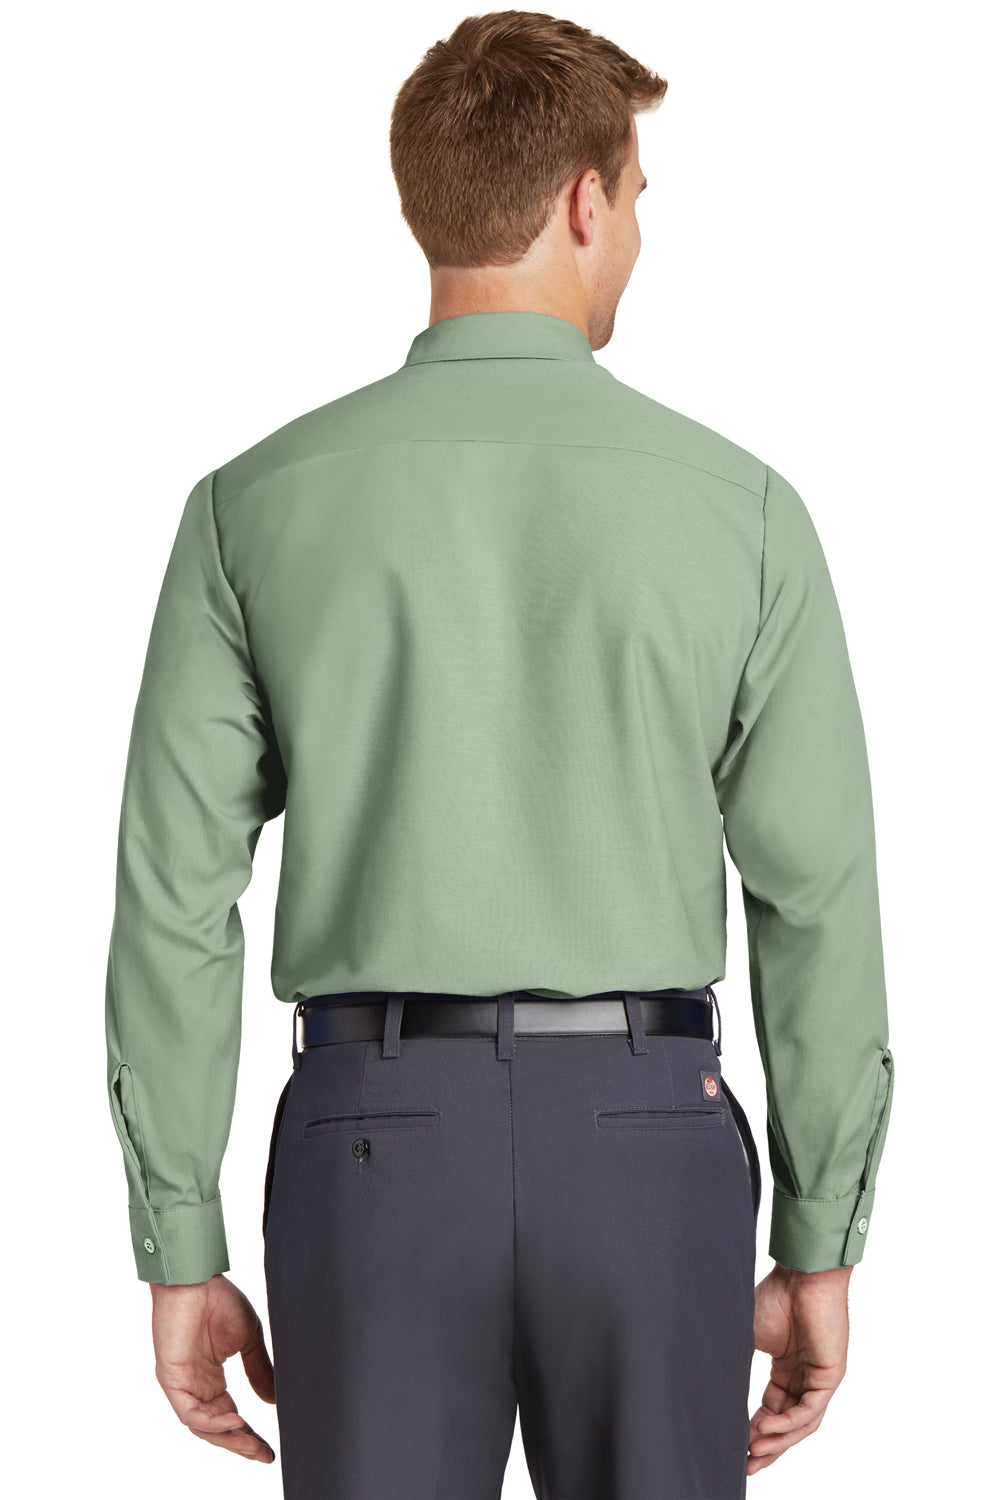 Red Kap SP14 Mens Industrial Moisture Wicking Long Sleeve Button Down Shirt w/ Double Pockets Light Green Back